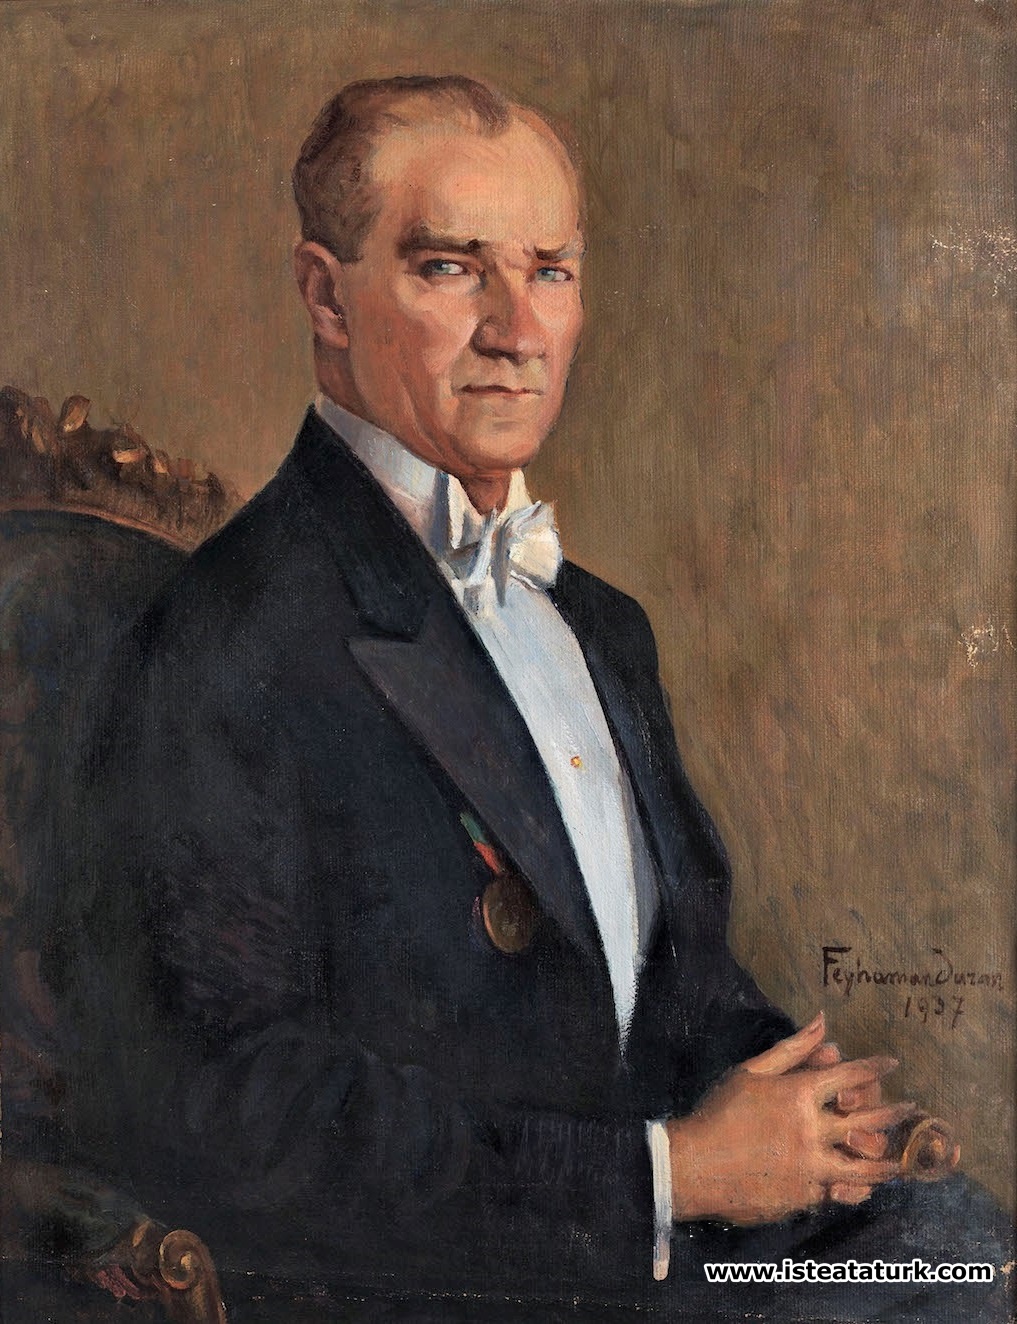 Feyhaman Duran, portrait of Atatürk, 1937